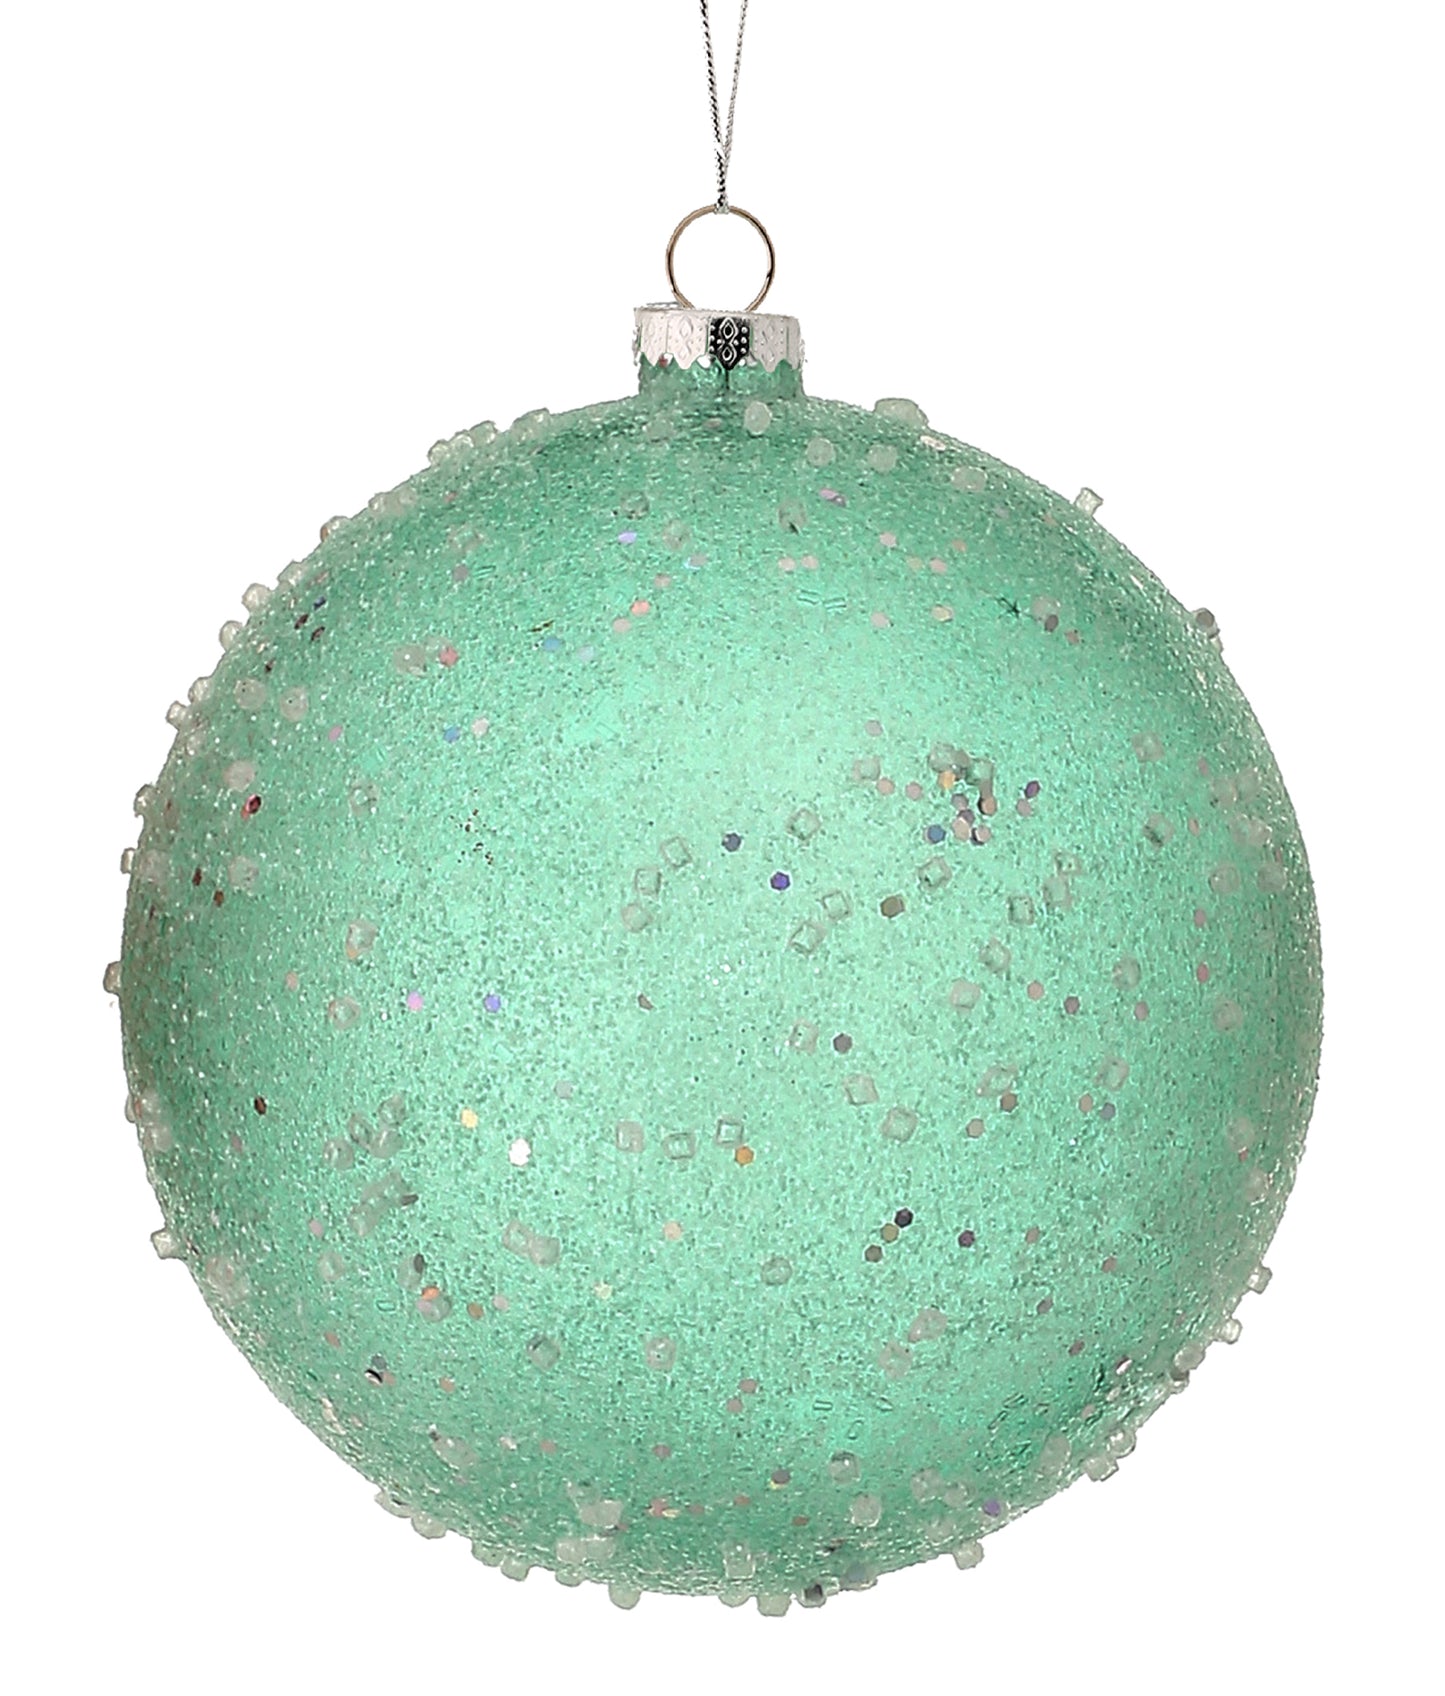 150MM Sparkly Gumdrop Ball Ornament - Mint